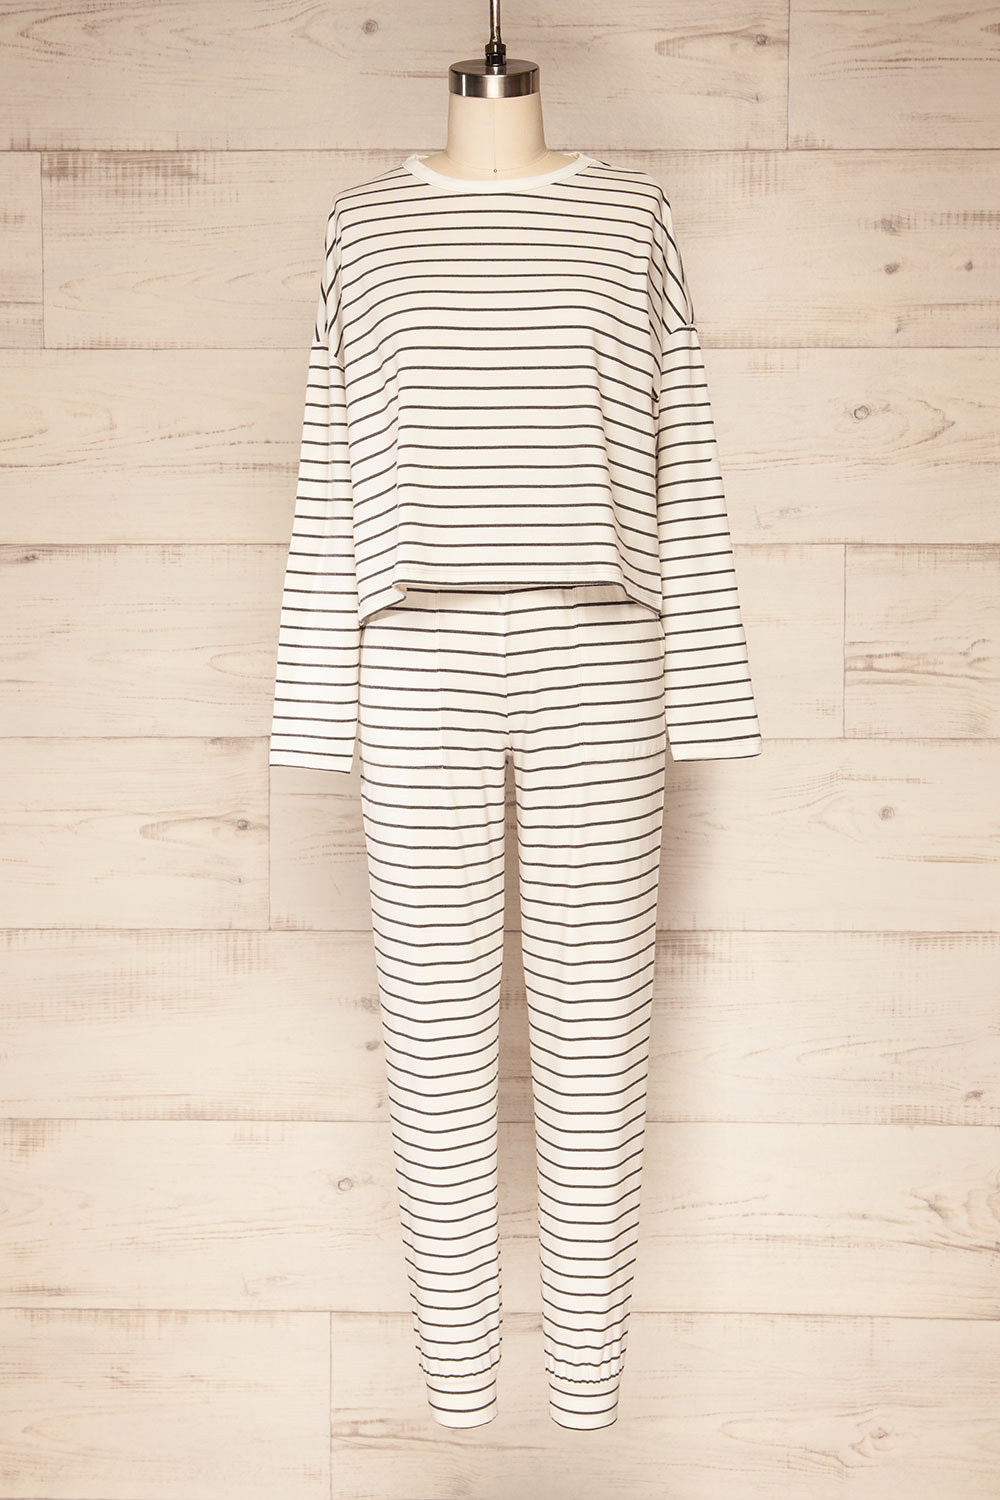 Set Capareac White Striped Pyjama Set | La petite garçonne set